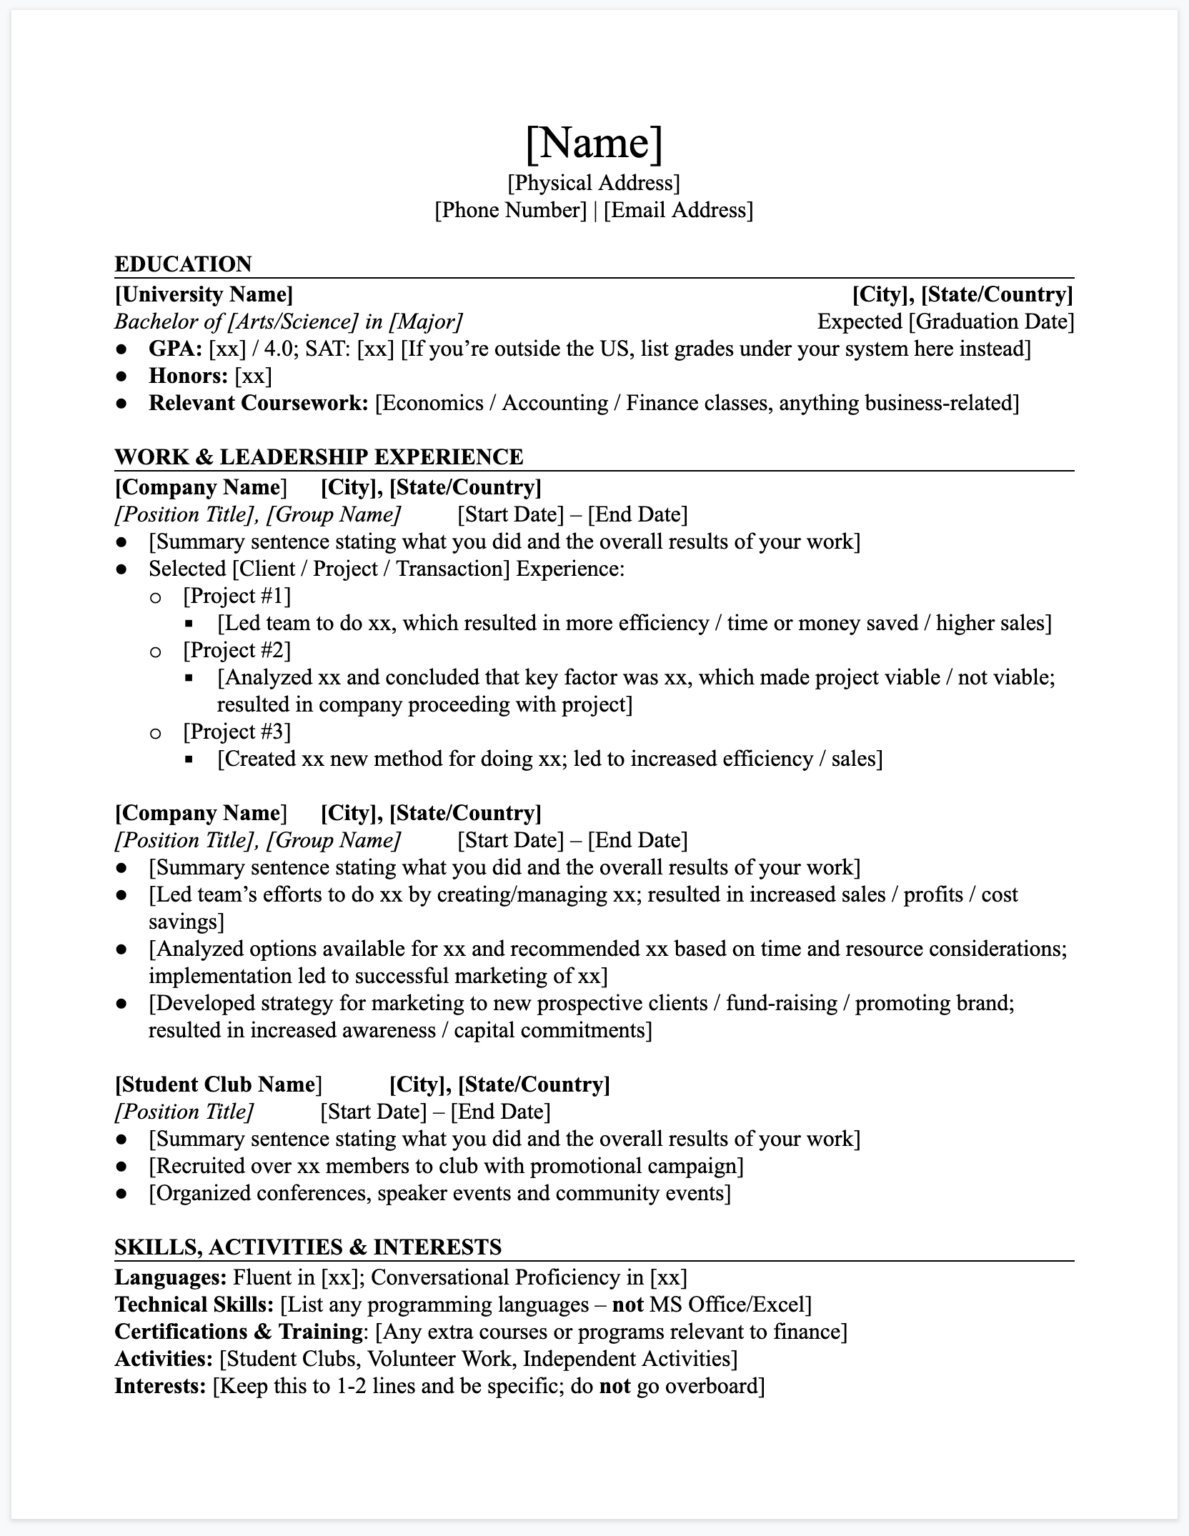 resume template harvard business school